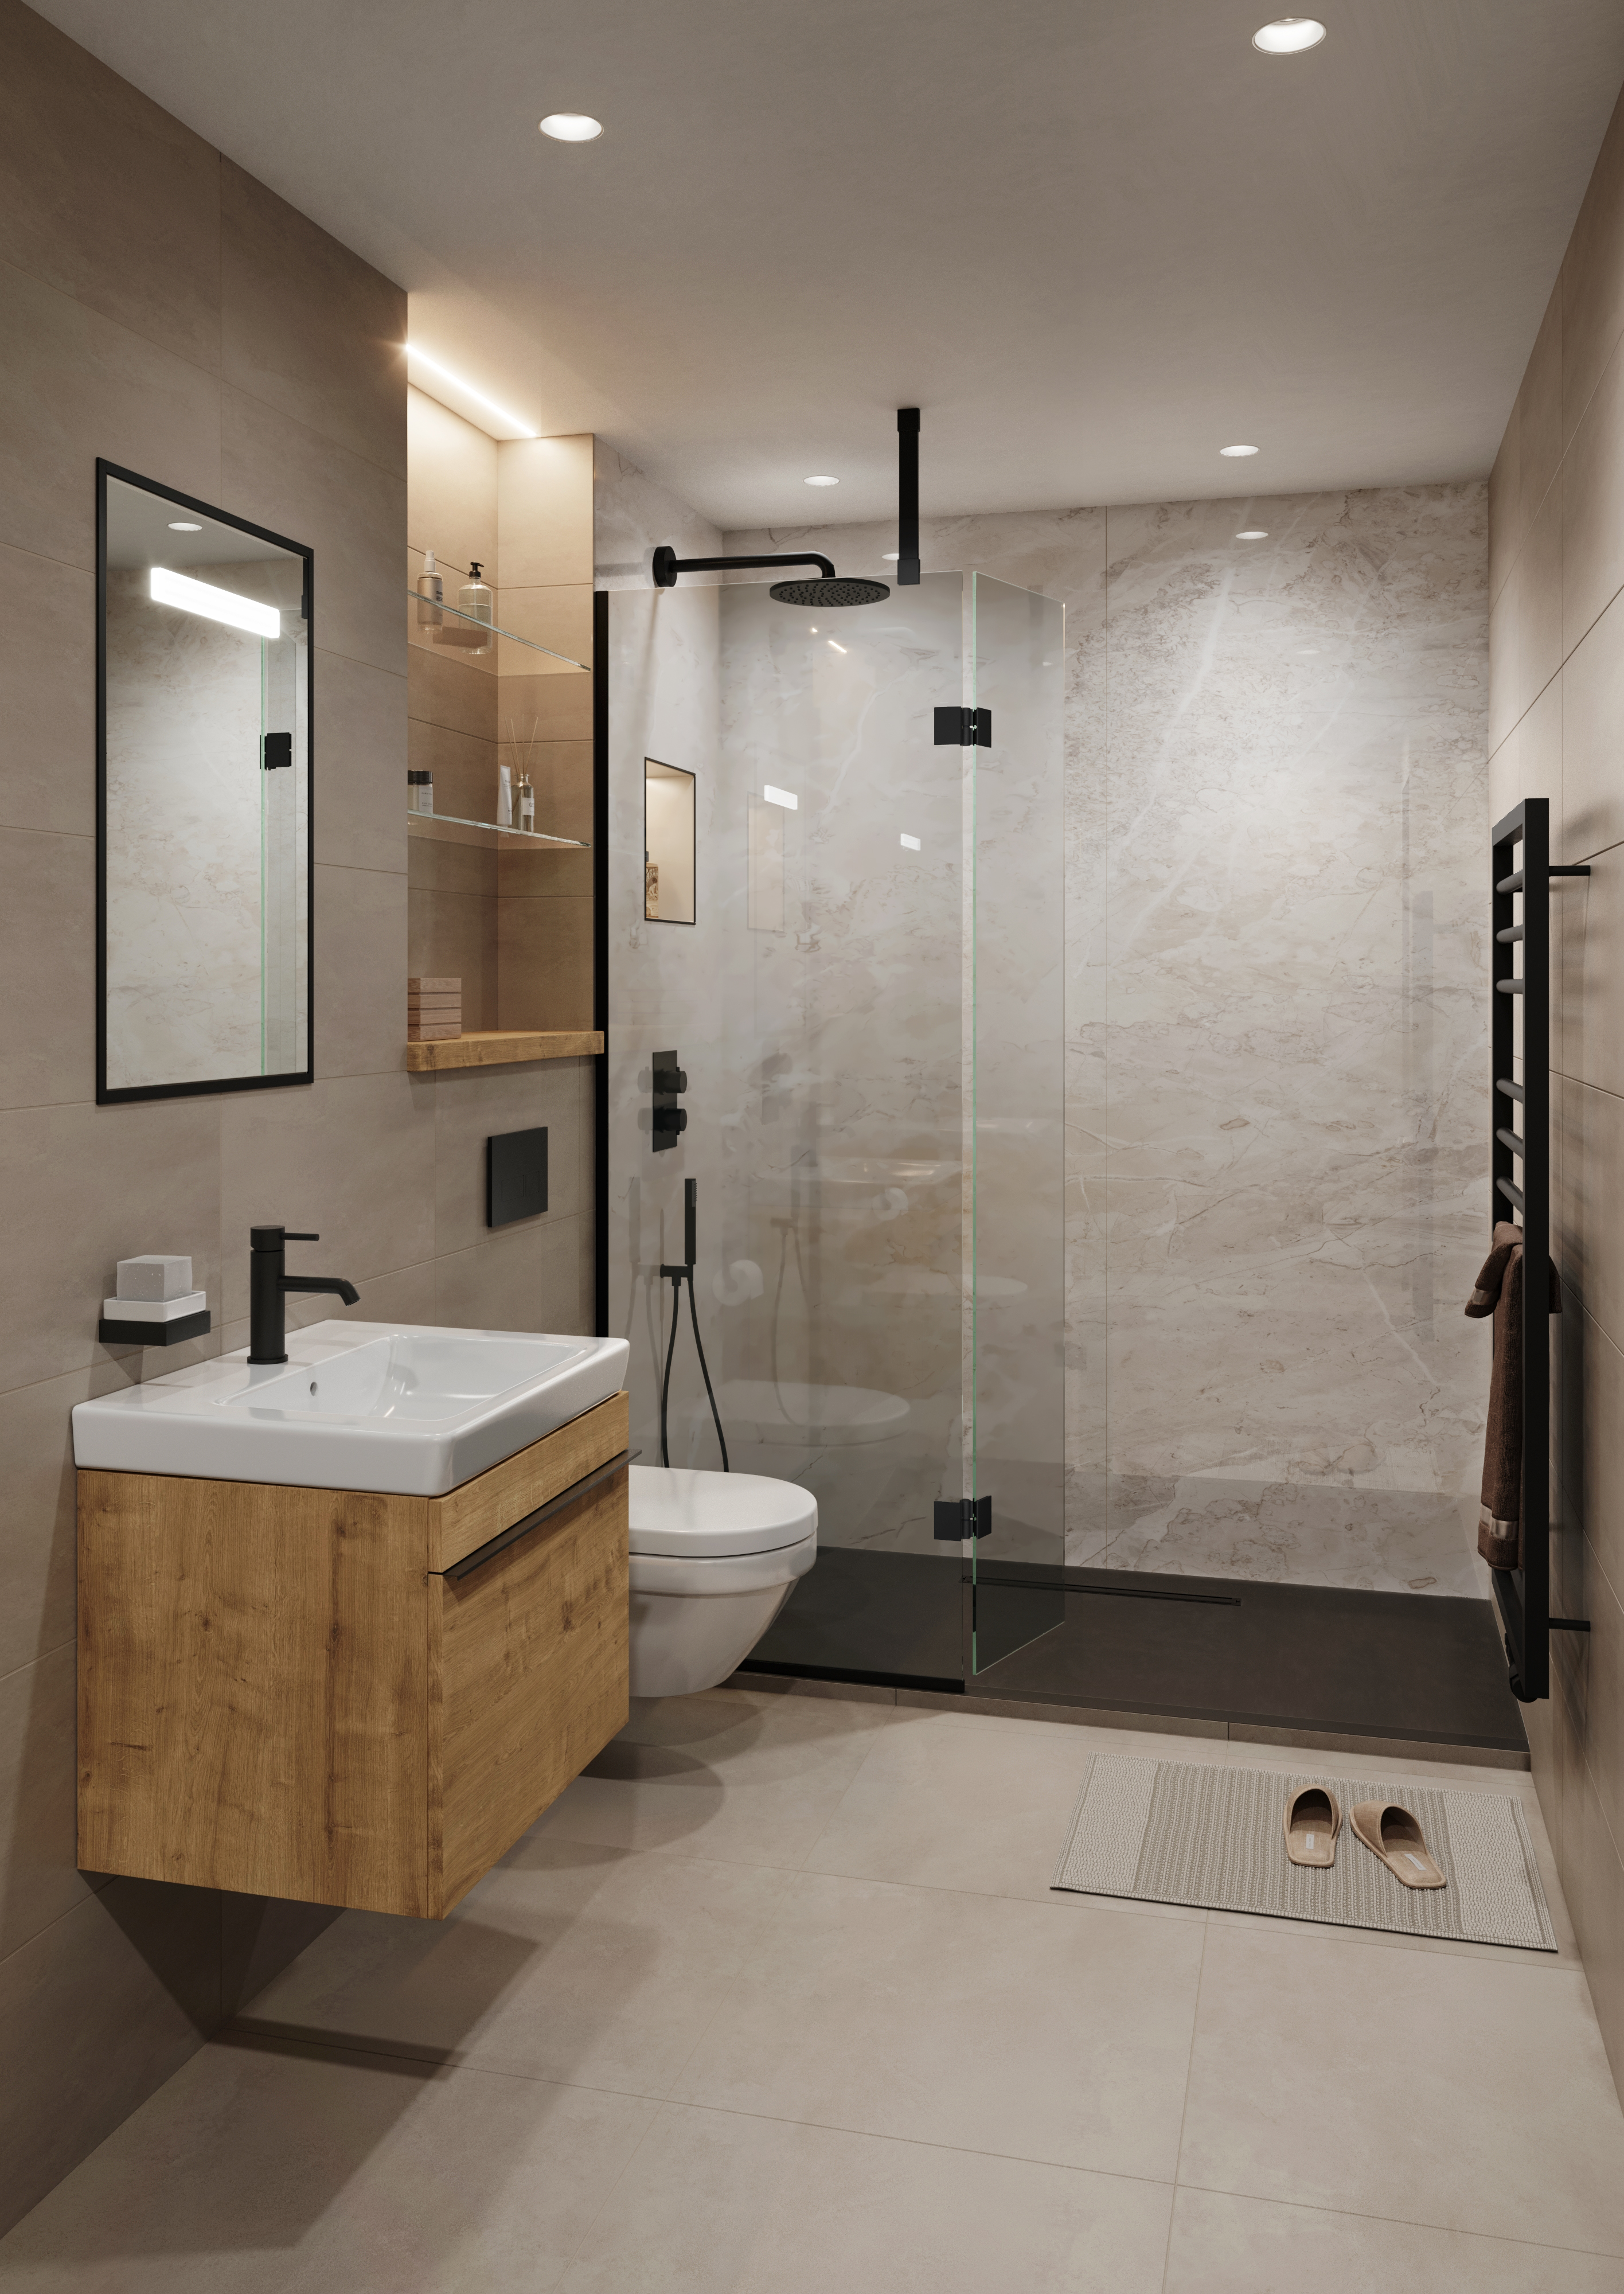 Corlea PVC Pergamon Marble Single Shower Panel - 2400 x 1000mm